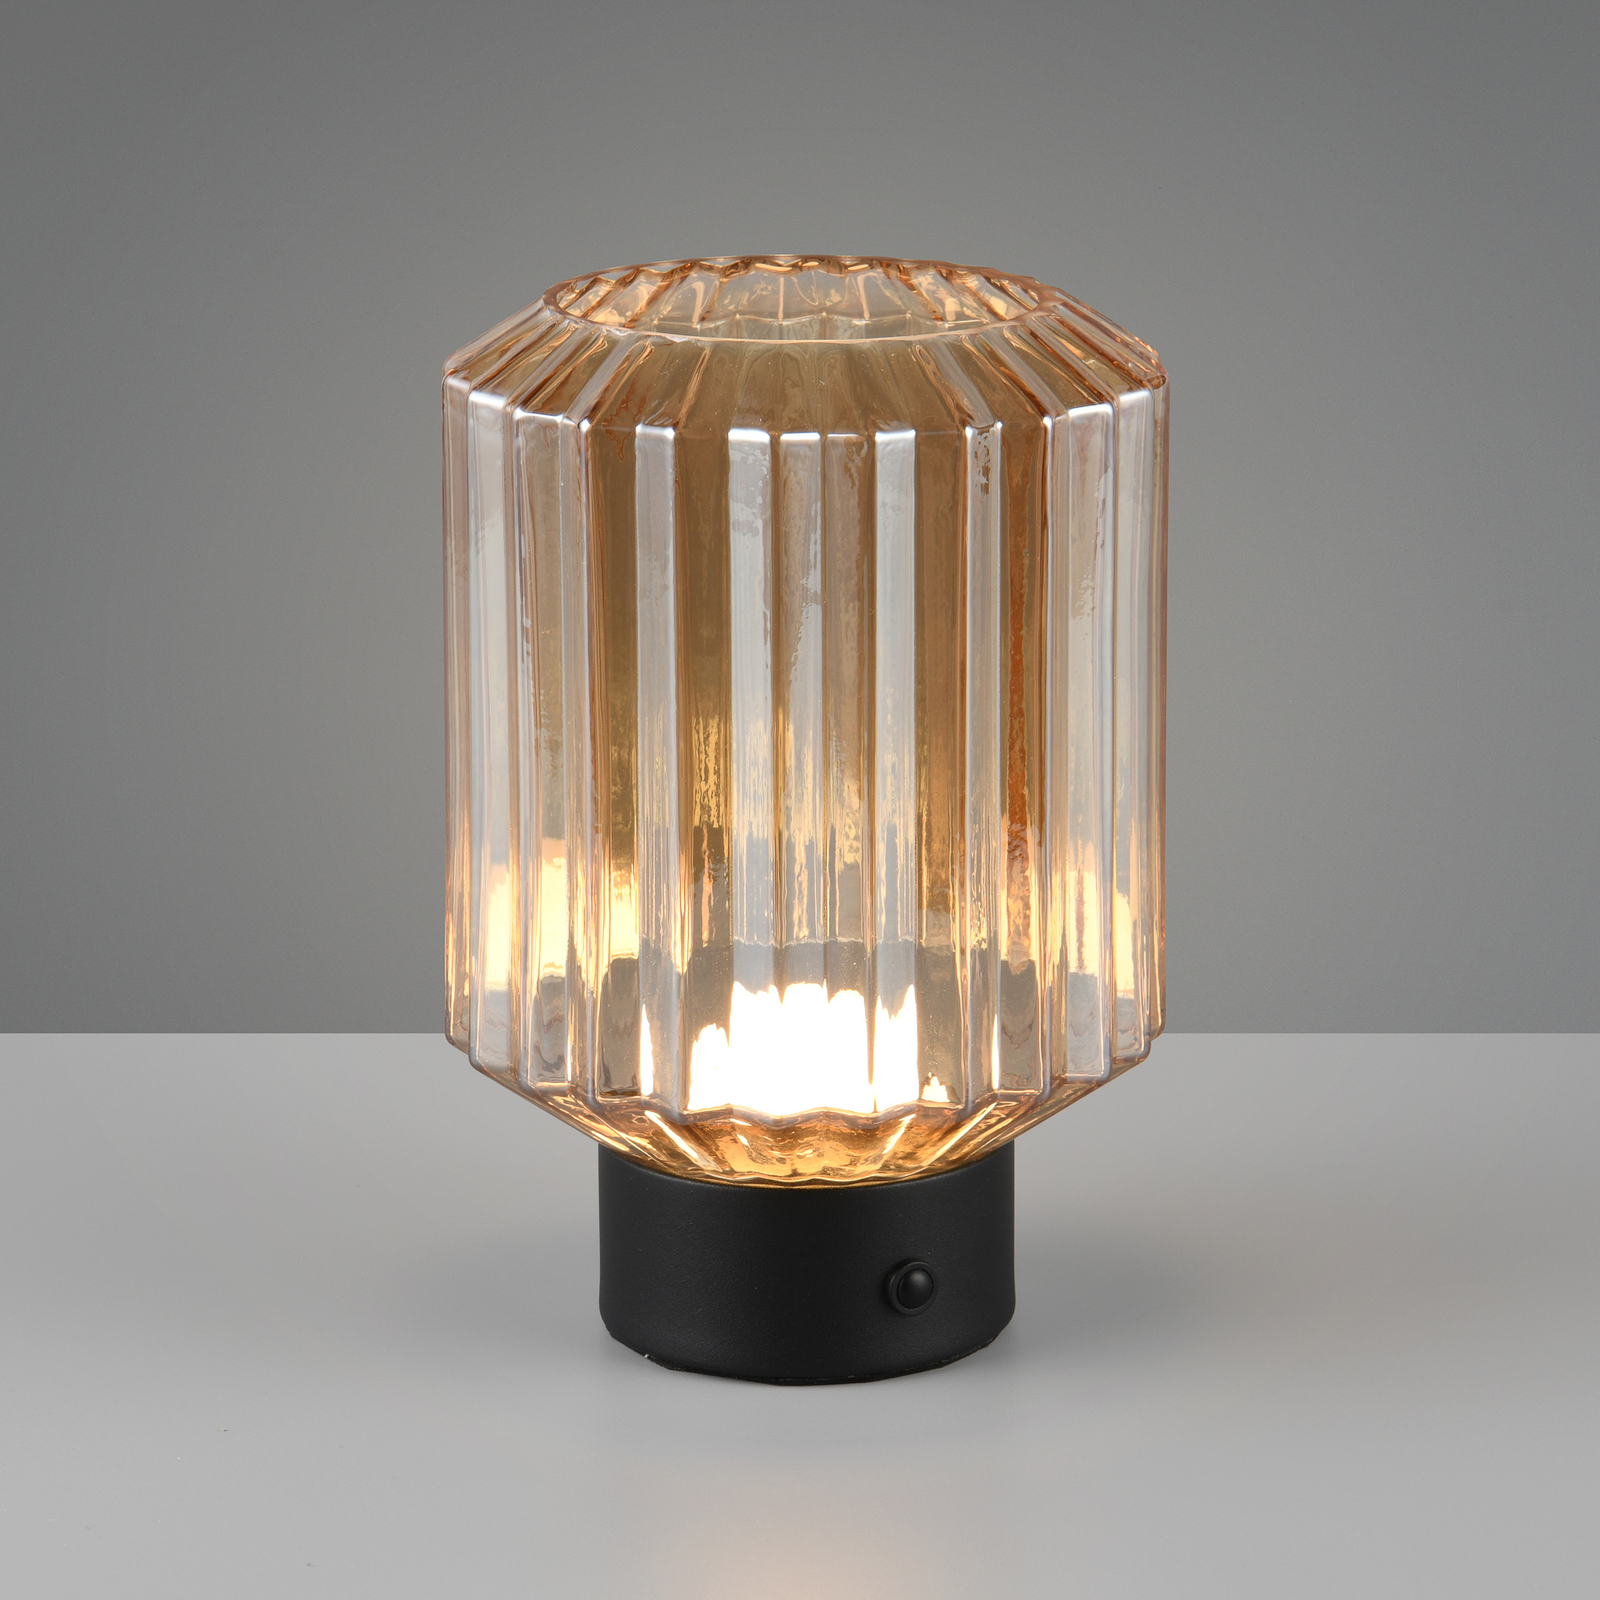 Lord LED tafellamp, zwart/amber, hoogte 19,5 cm, glas